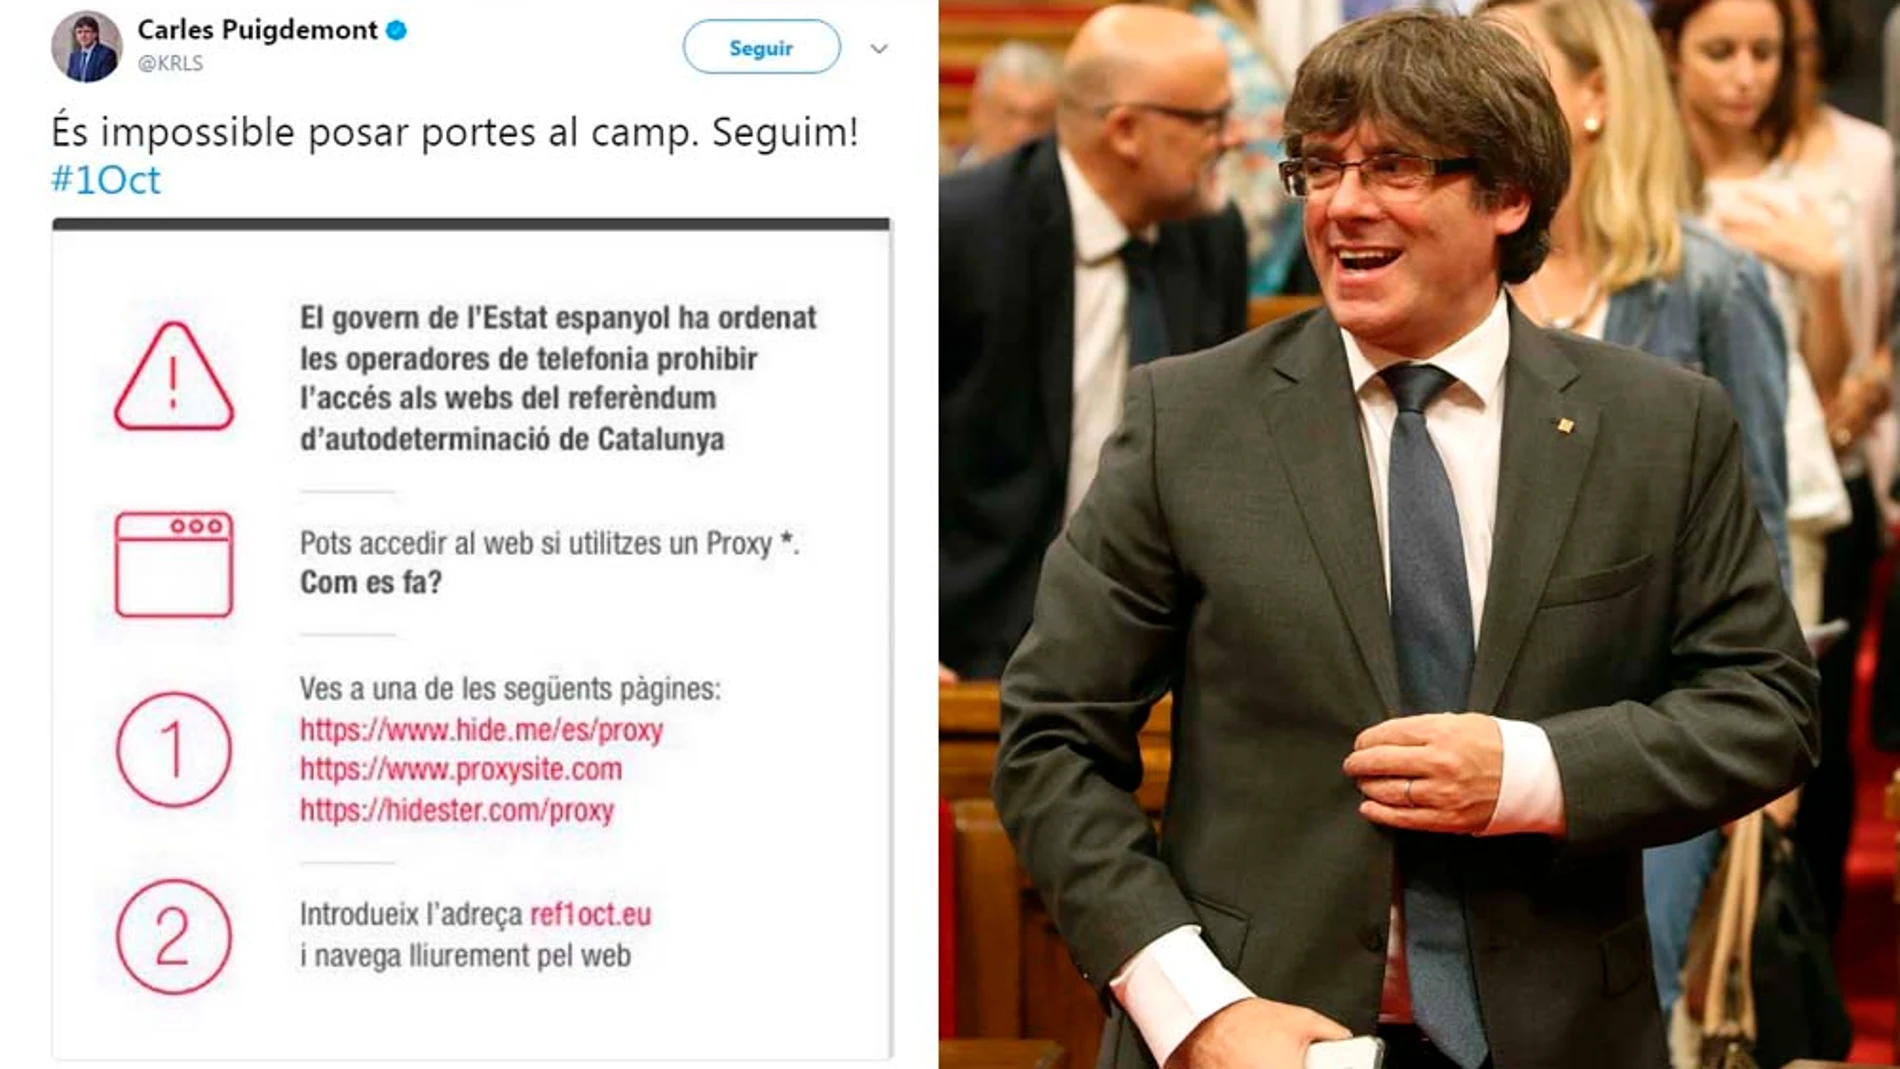 Tuit del President de la Generalitat el que explica cómo burlar el bloqueo a las web del referéndum